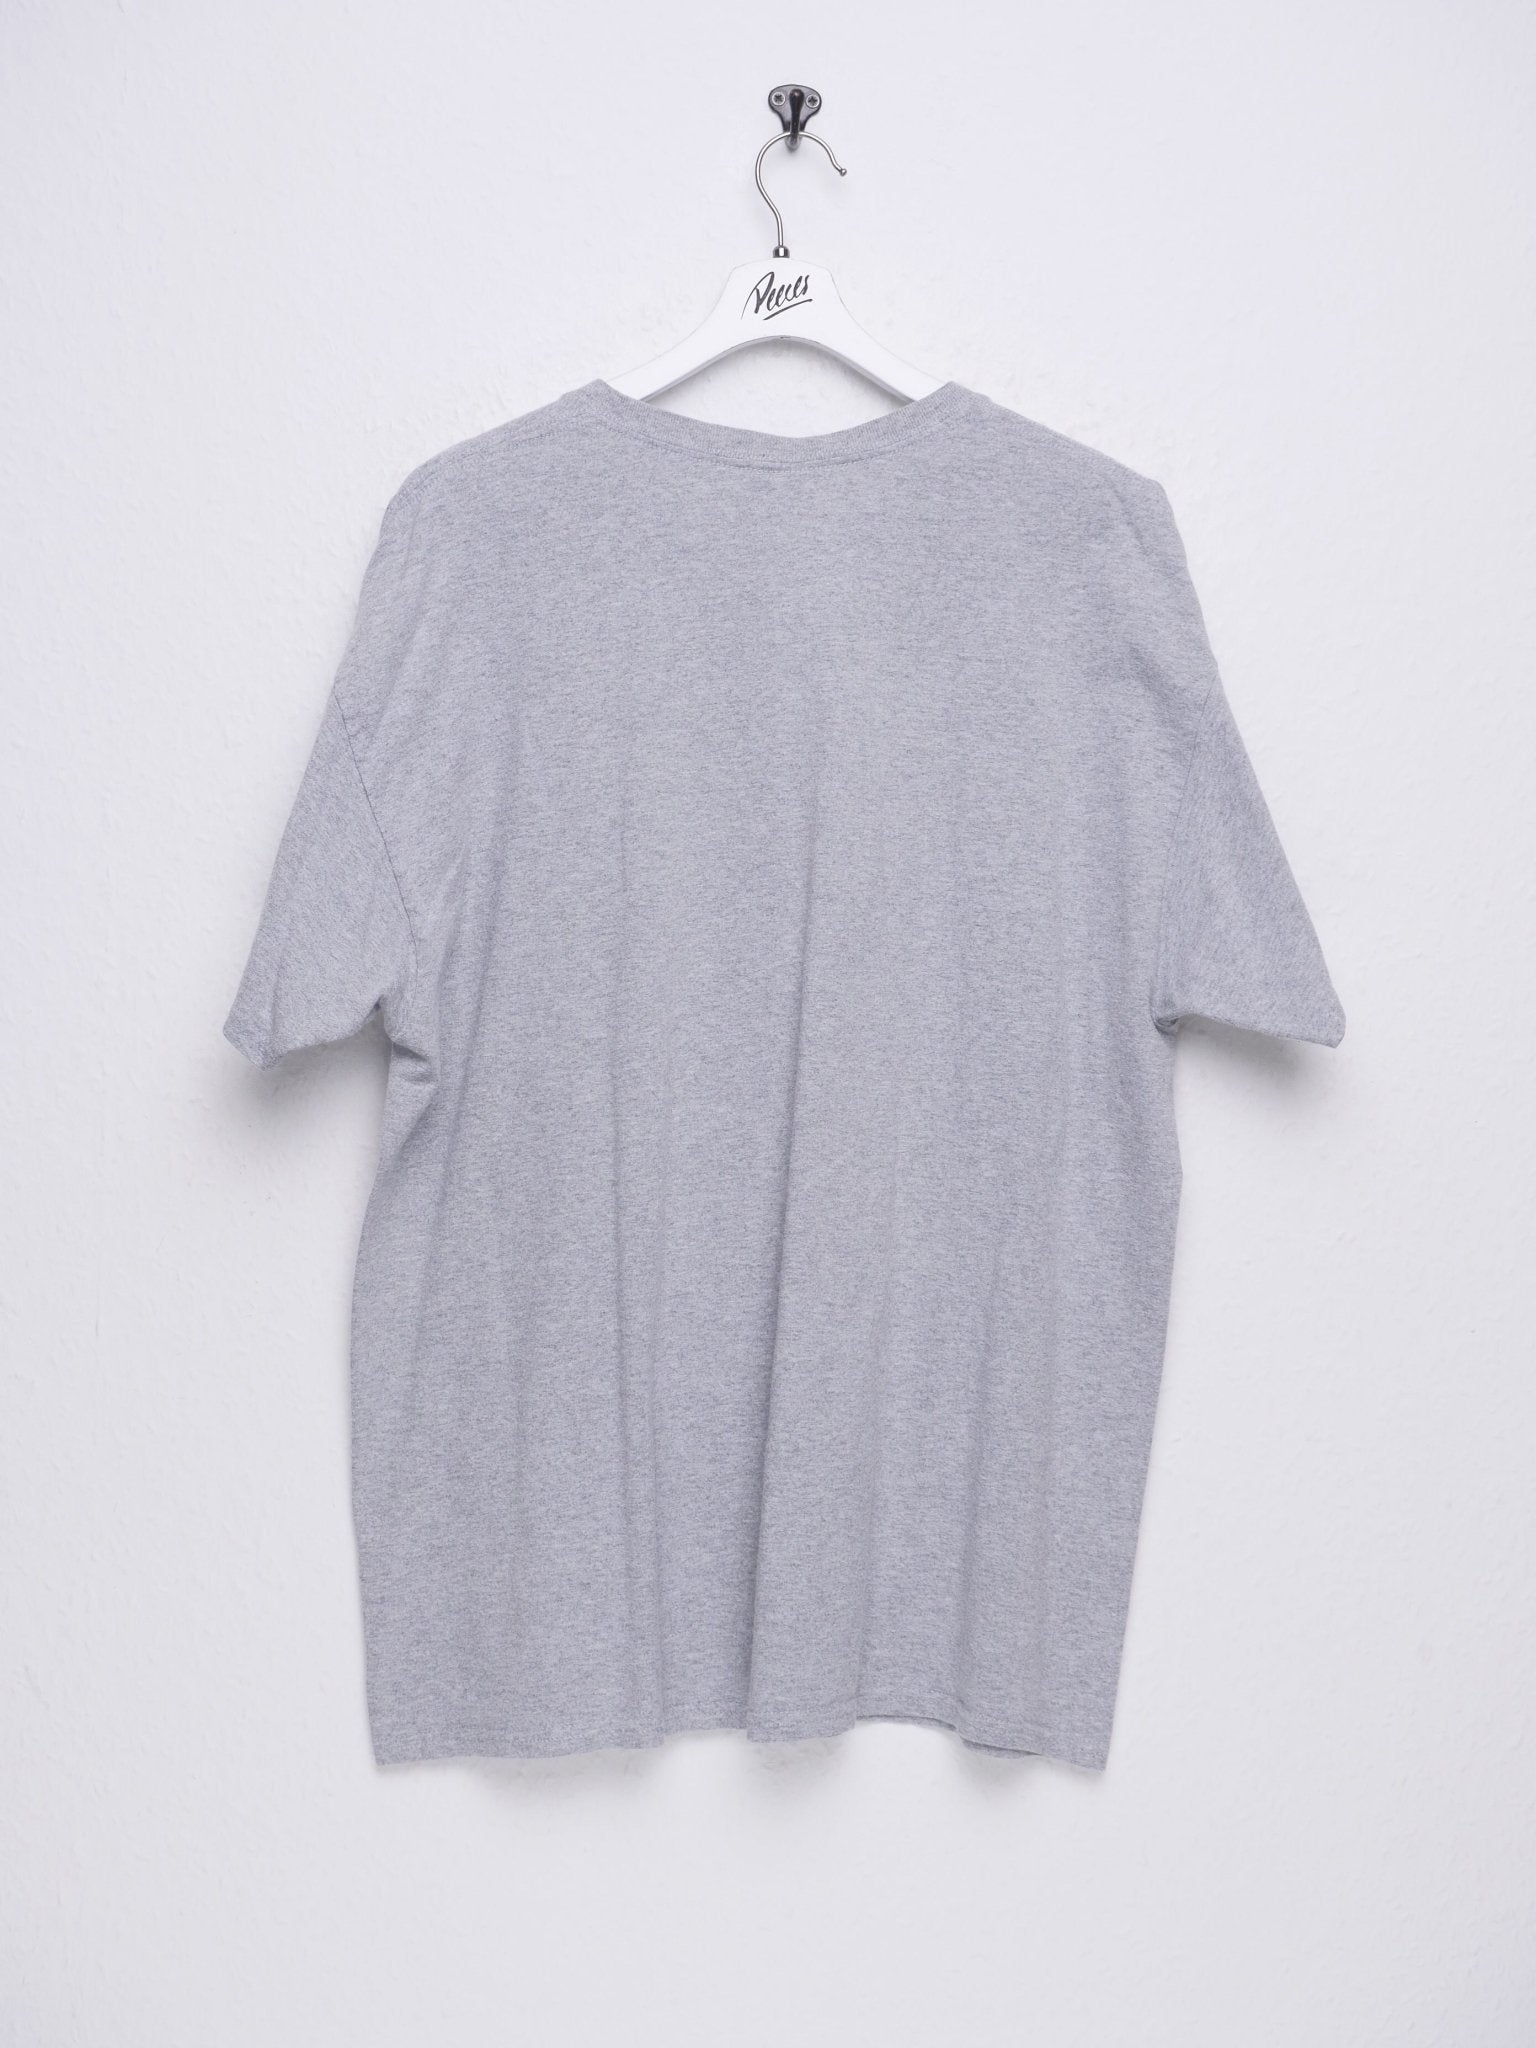 Jersey Boys printed Graphic grey Shirt - Peeces